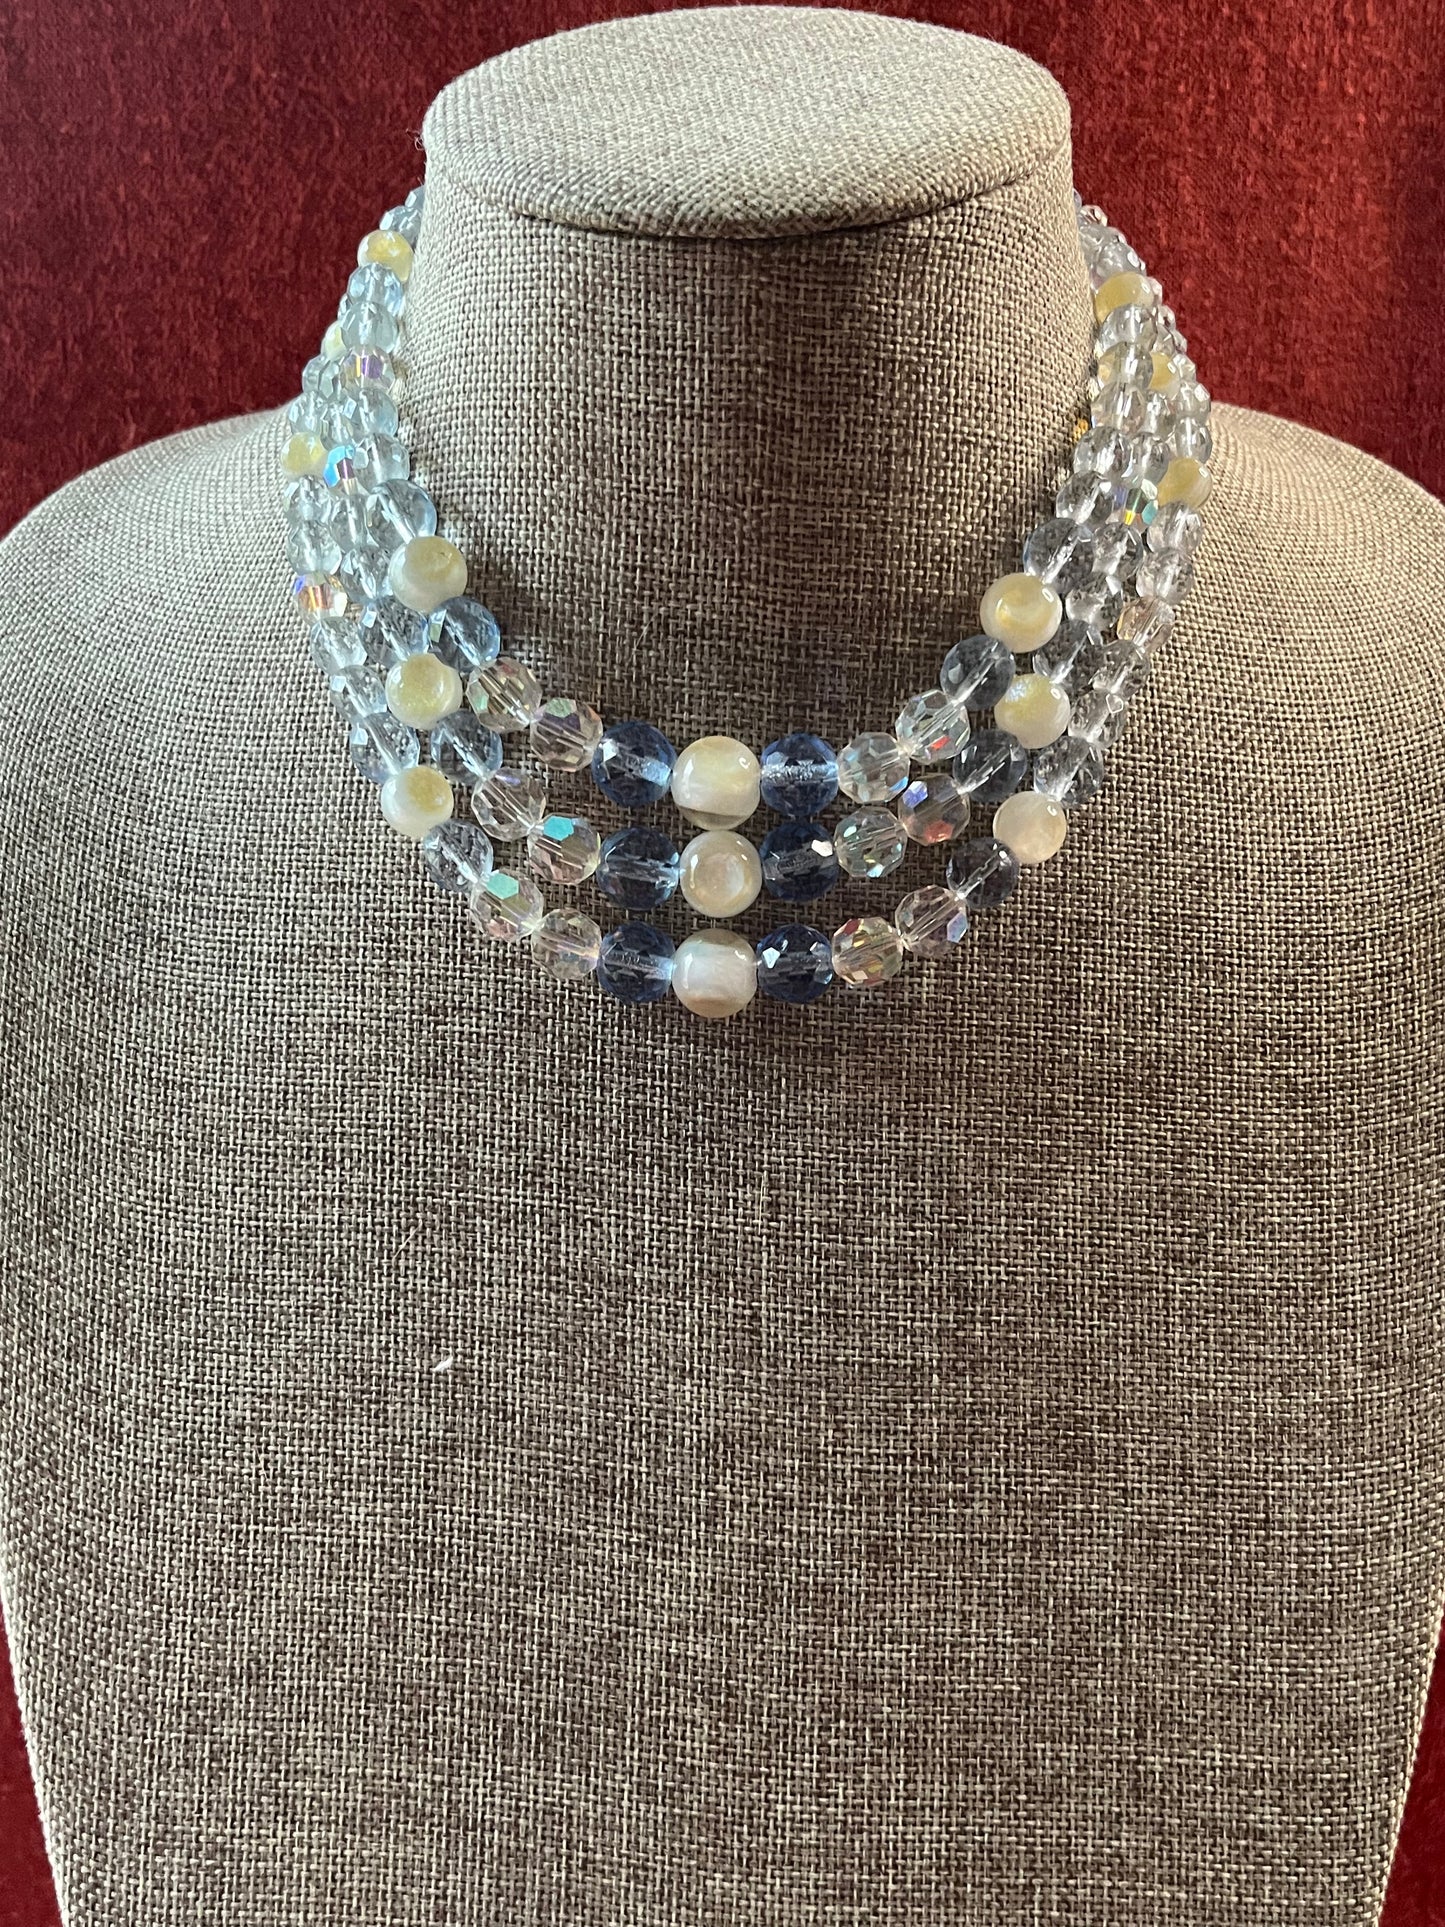 christian dior vintage necklace choker